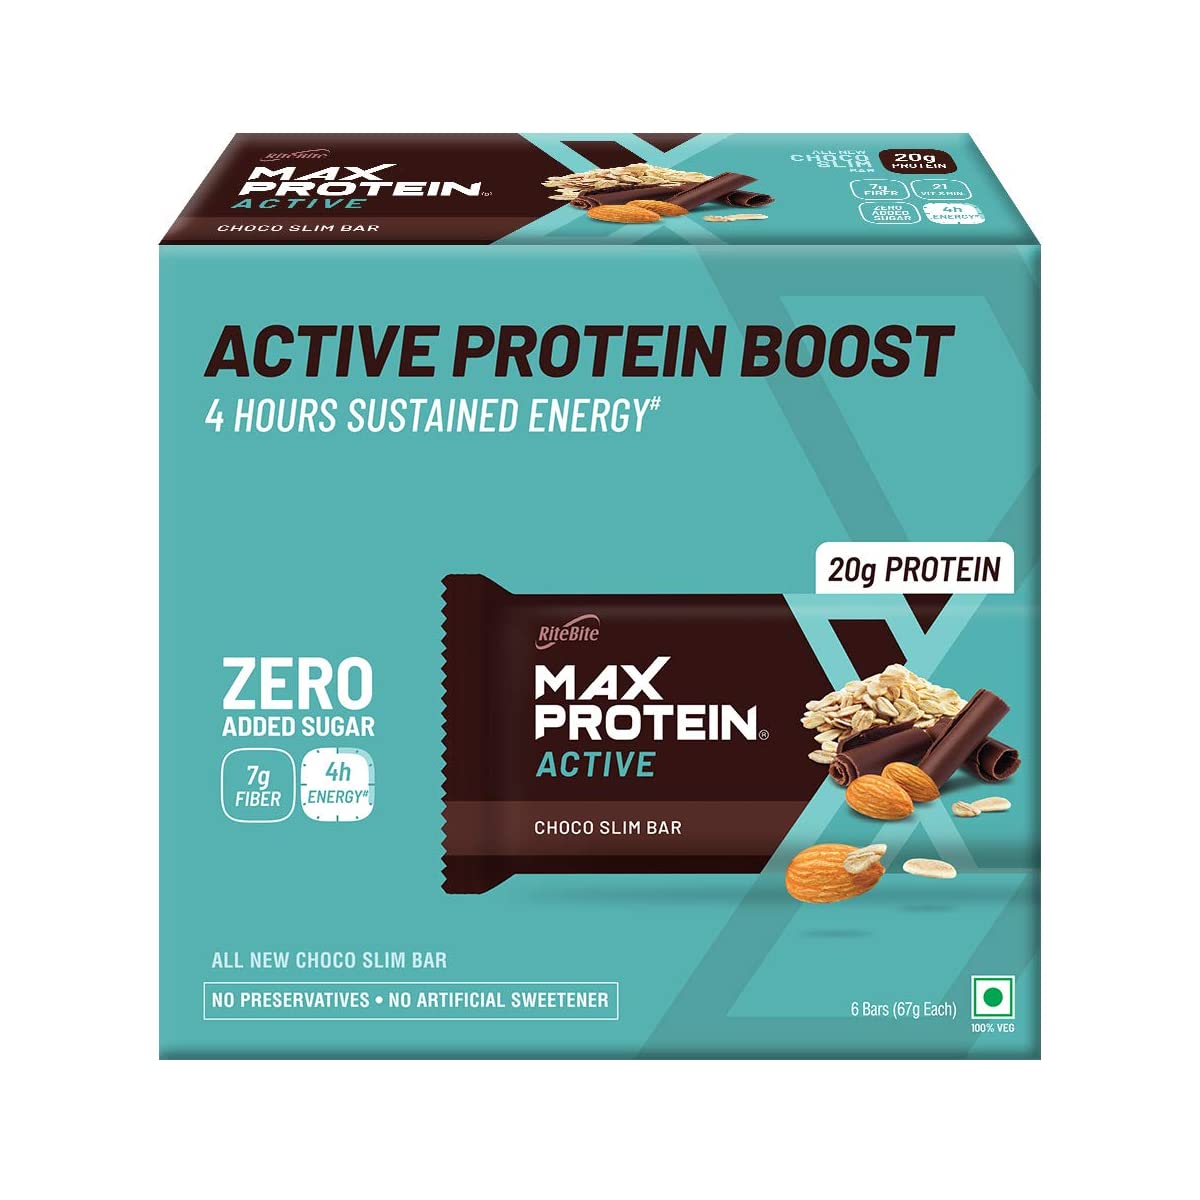 Max Protein Active Choco Slim - 20g Protein (Pack of 6) RiteBite Max Protein